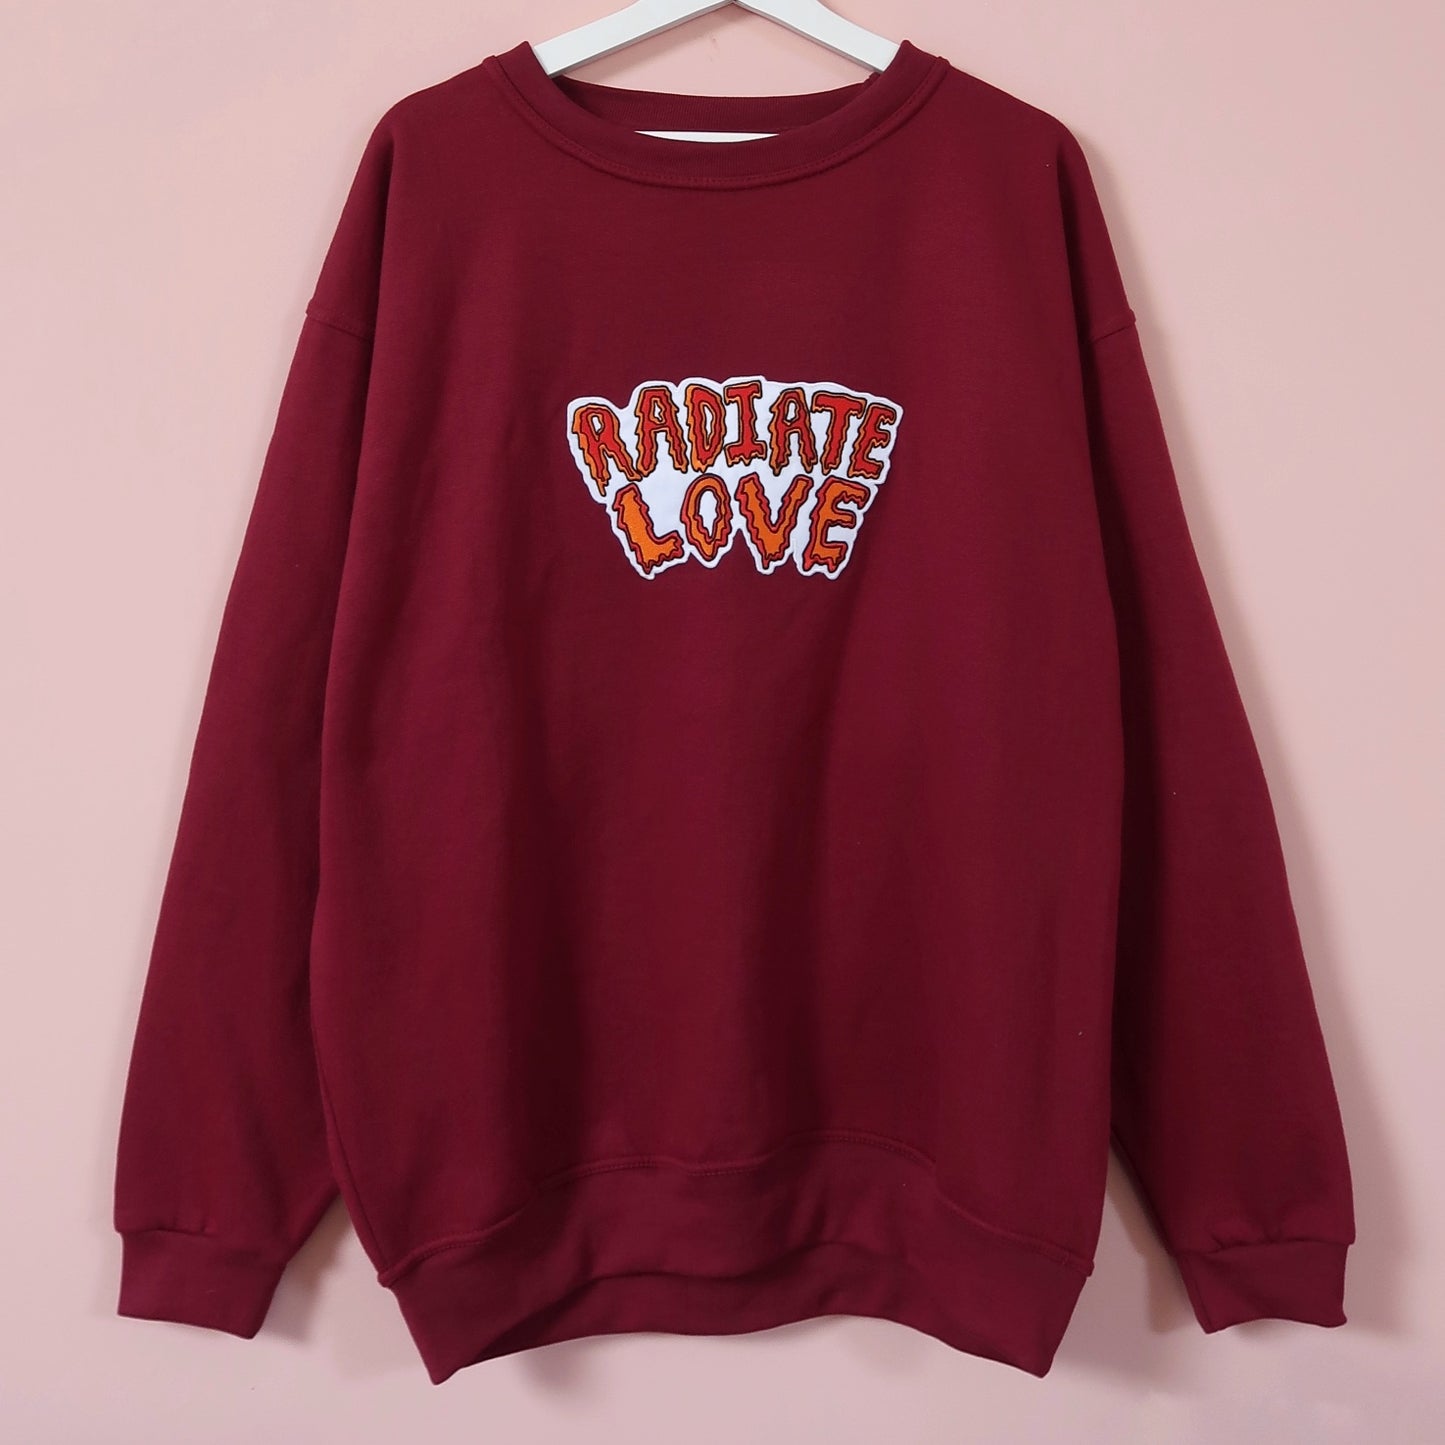 radiate love embroidered sweatshirt - burgundy